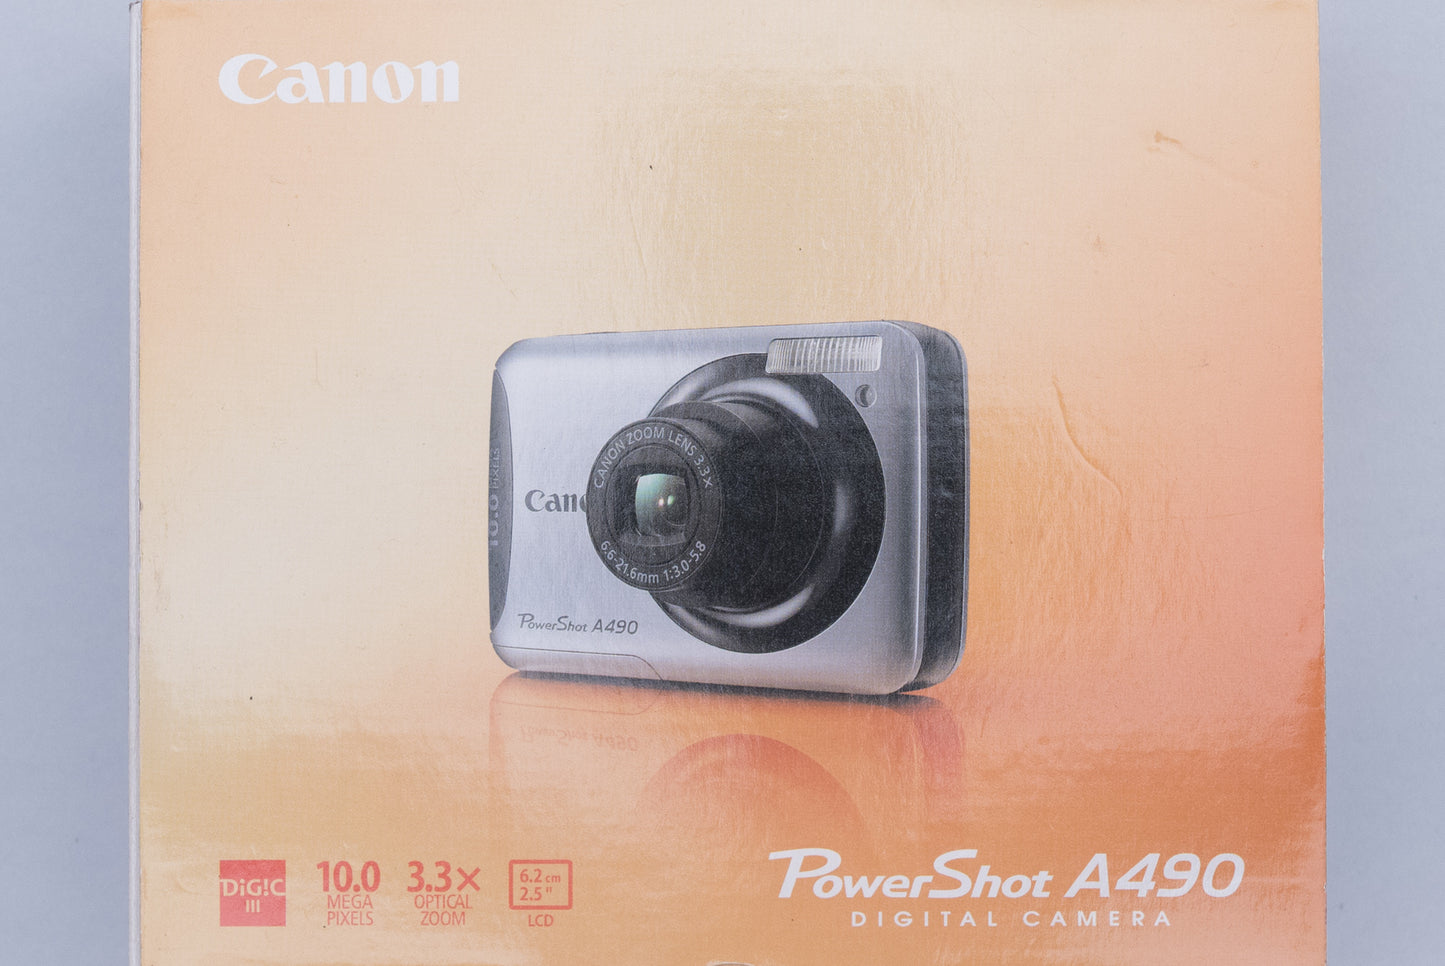 Canon PowerShot A490 Compact Digital Camera